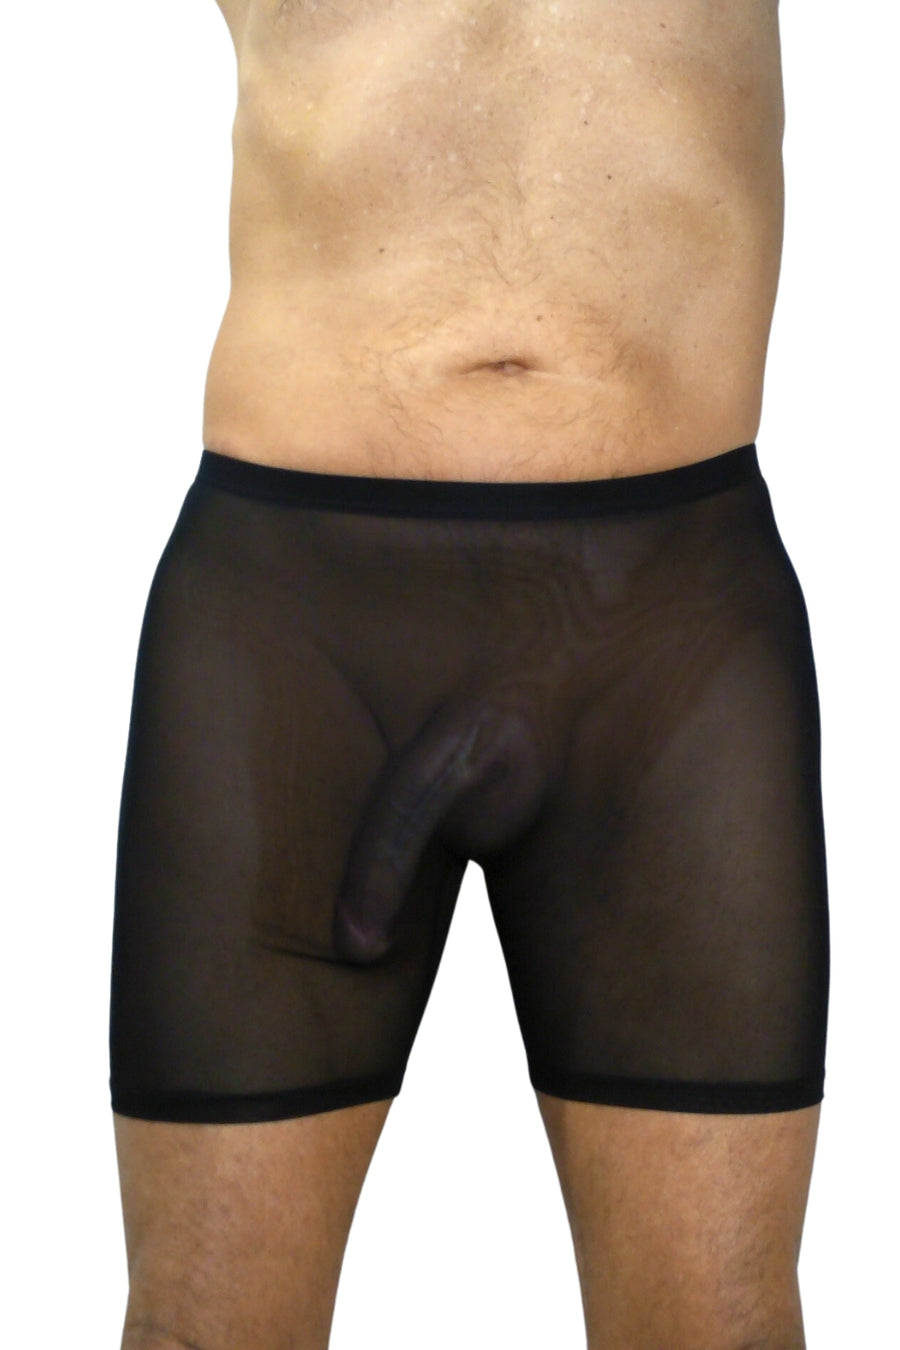 BfM Mens High-Waist Ultra Sheer Flat Front Boxer Shorts